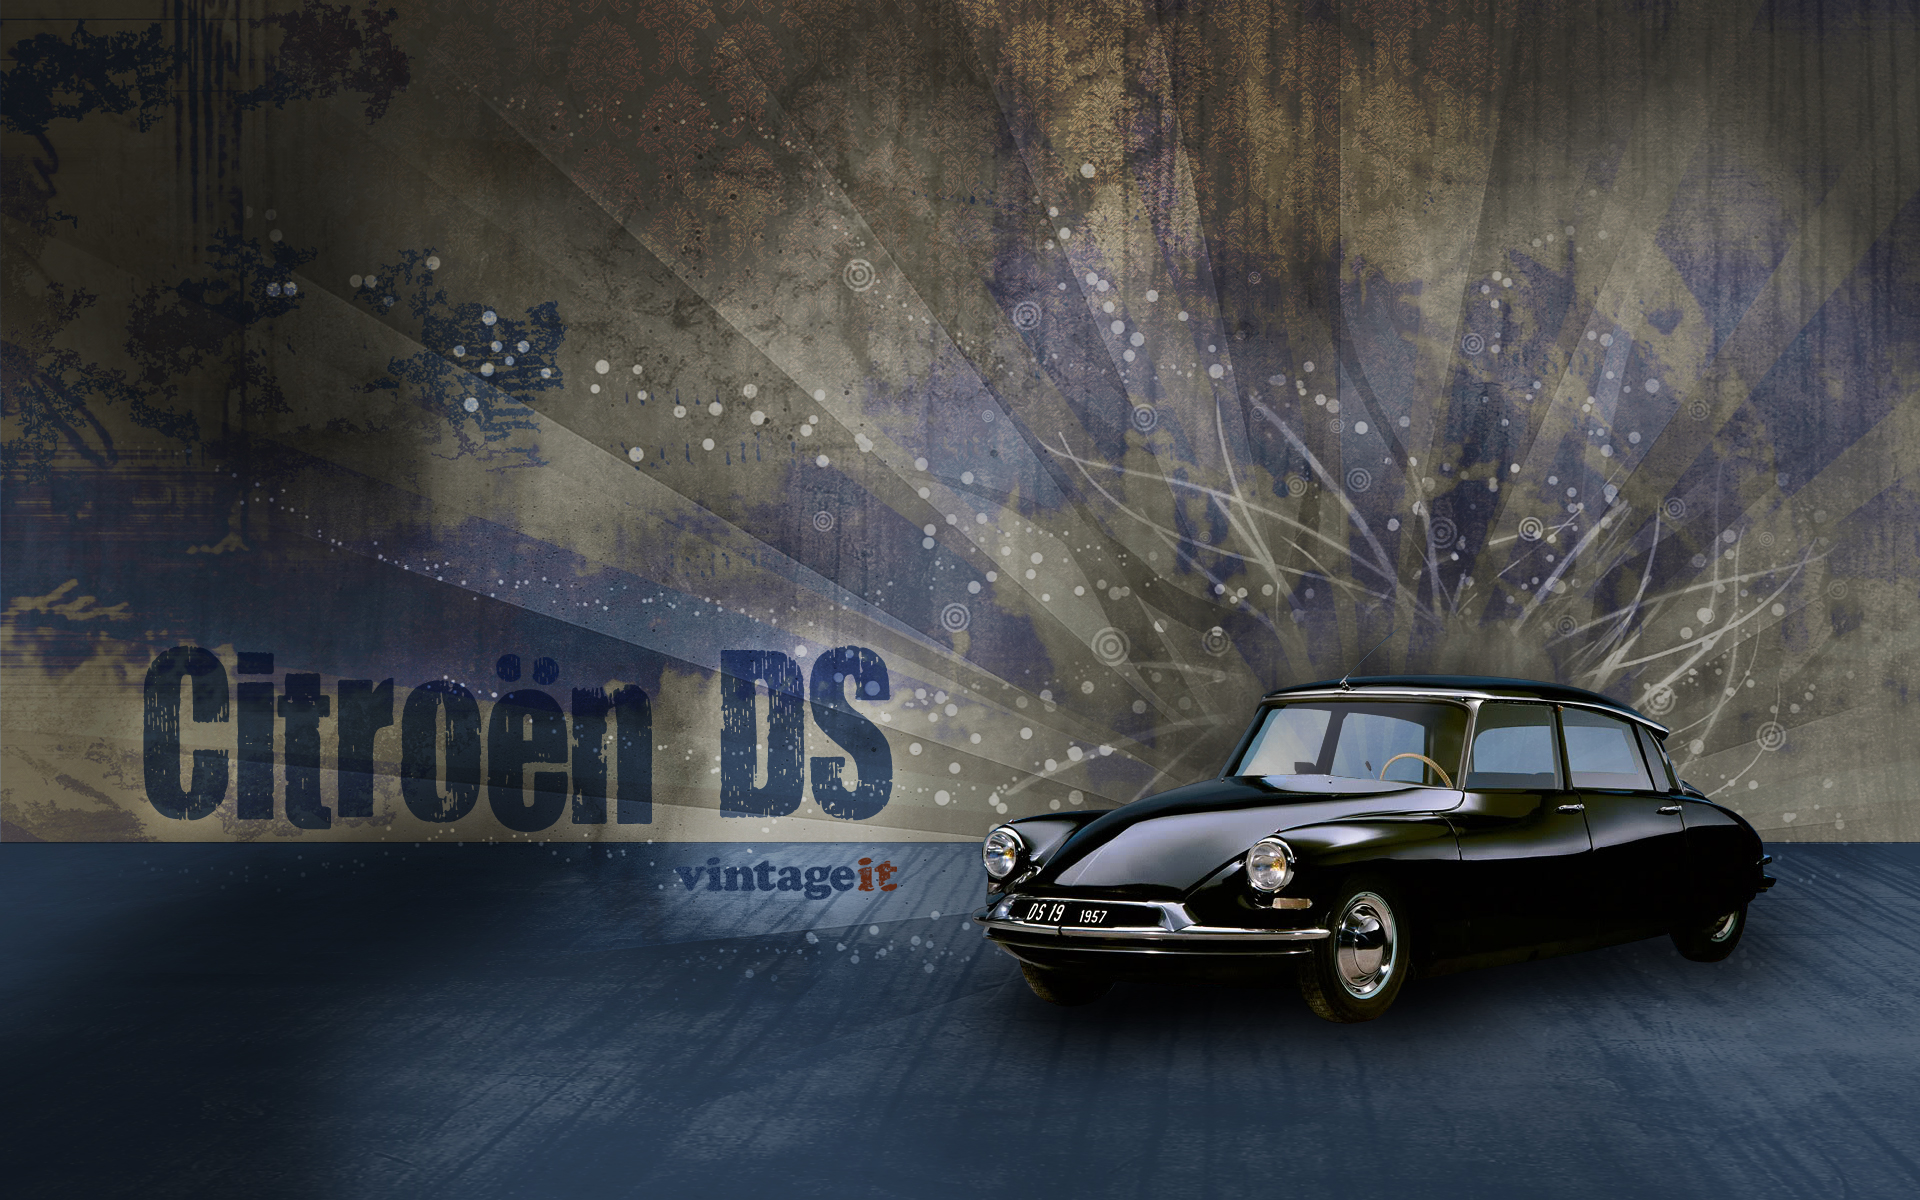 Citroën DS vintage wallpaper Desktop HD iPad iPhone wallpaper